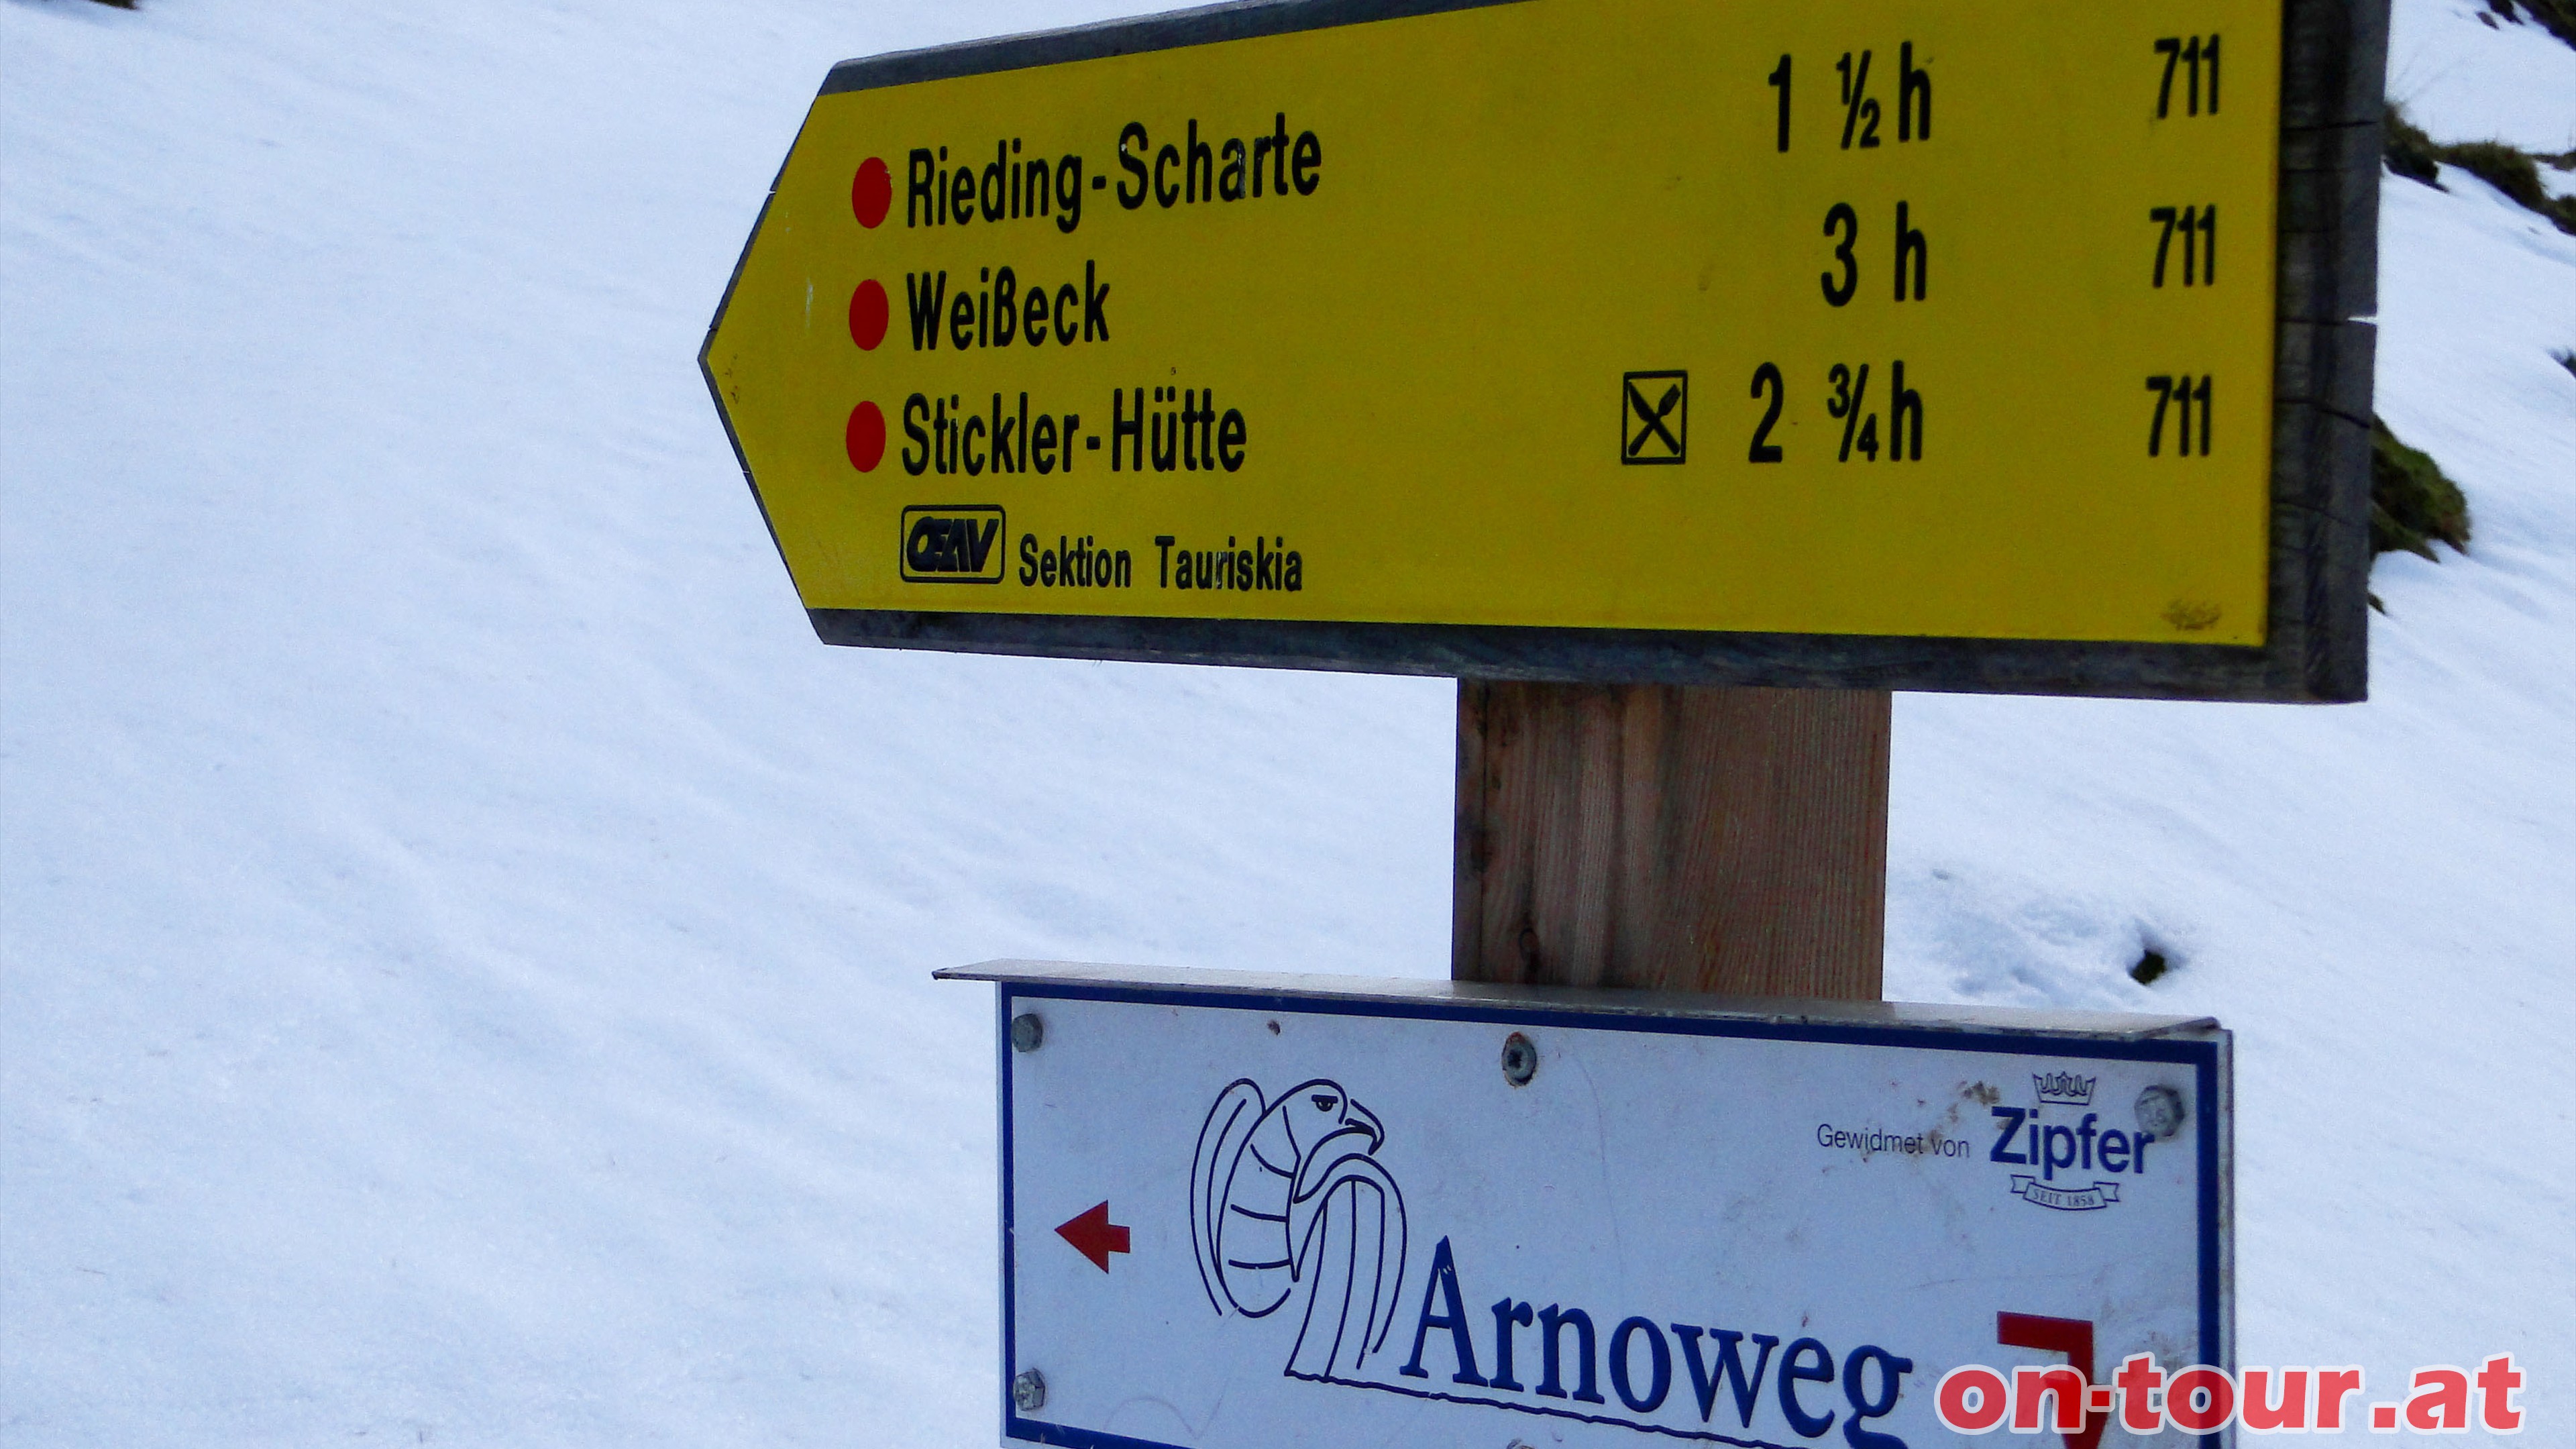 Hier fhrt der Weg (falls erkennbar) links bergauf - Richtung Sdosten zur Rieding-Scharte.